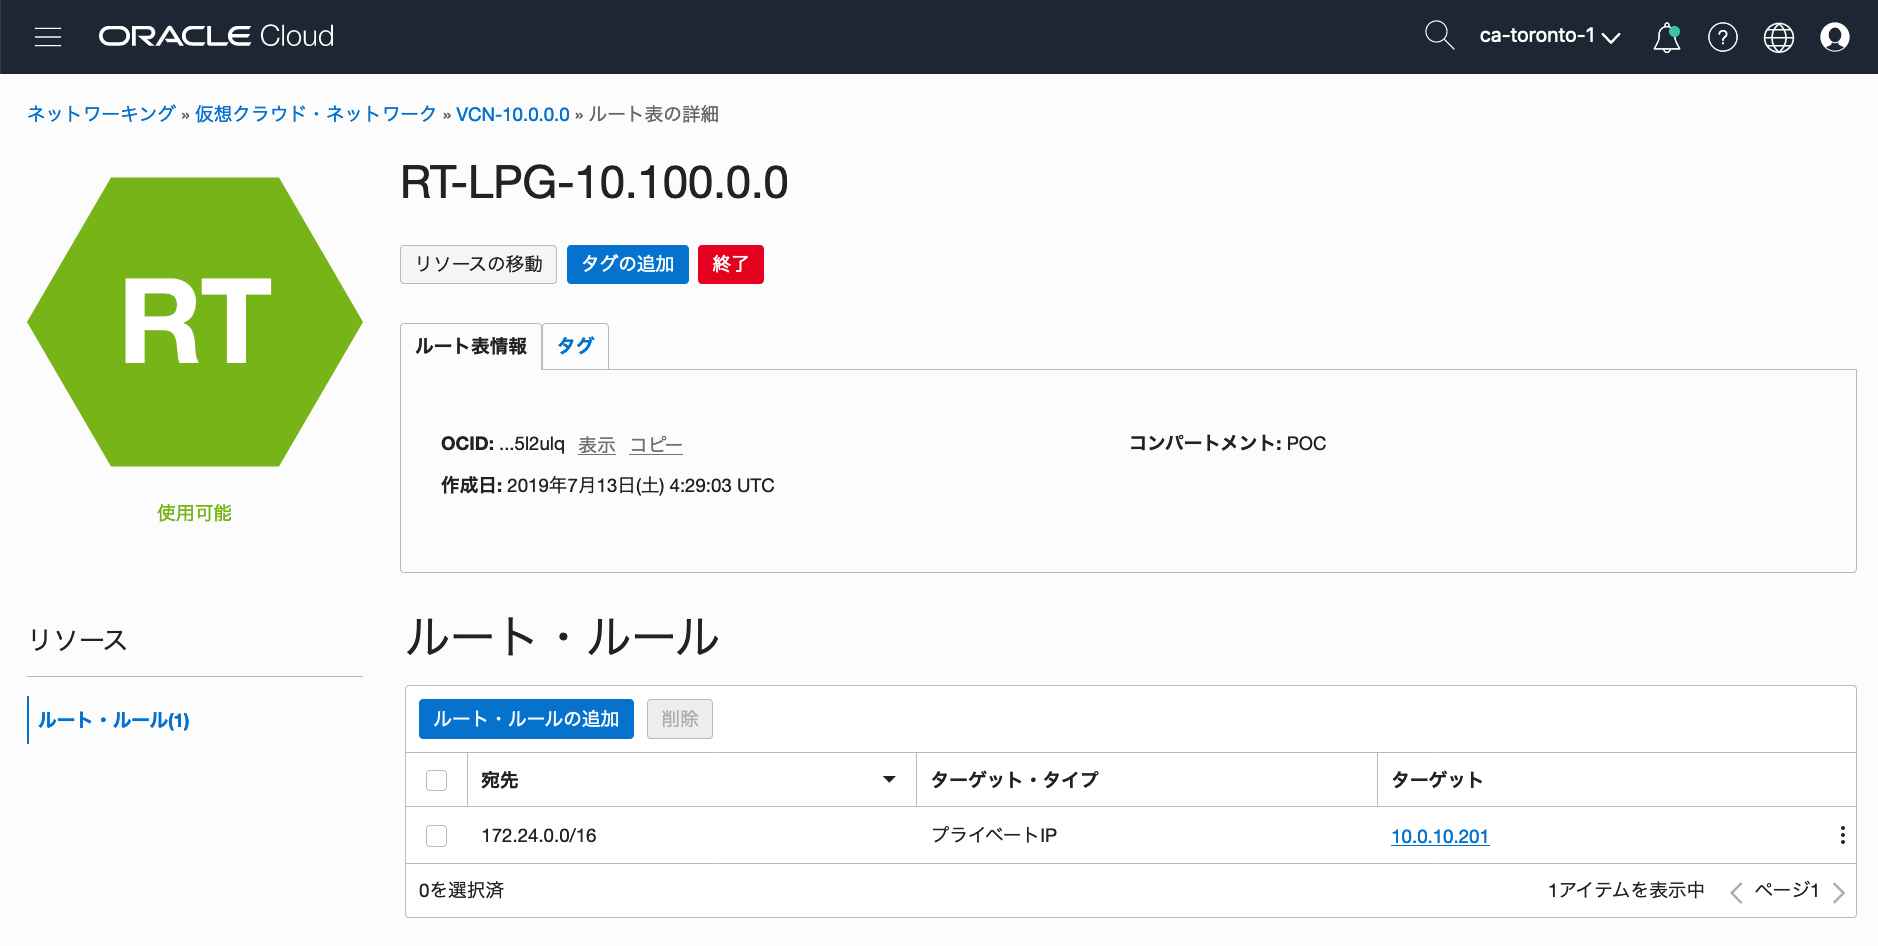 ③Hub-RT-LPG-10.100.0.0_01.png